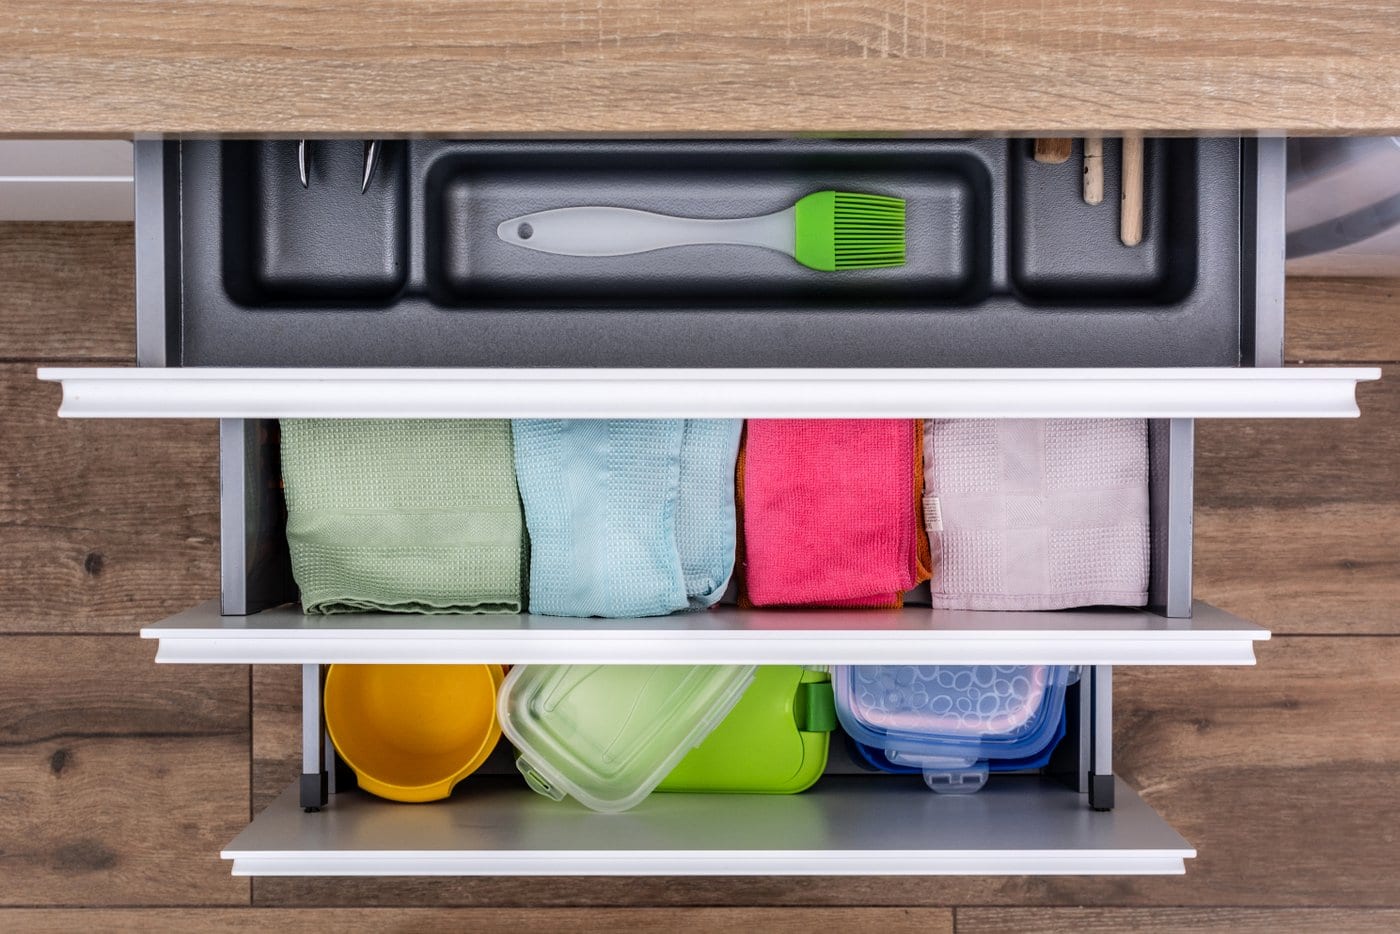 Well-organized kitchen drawers